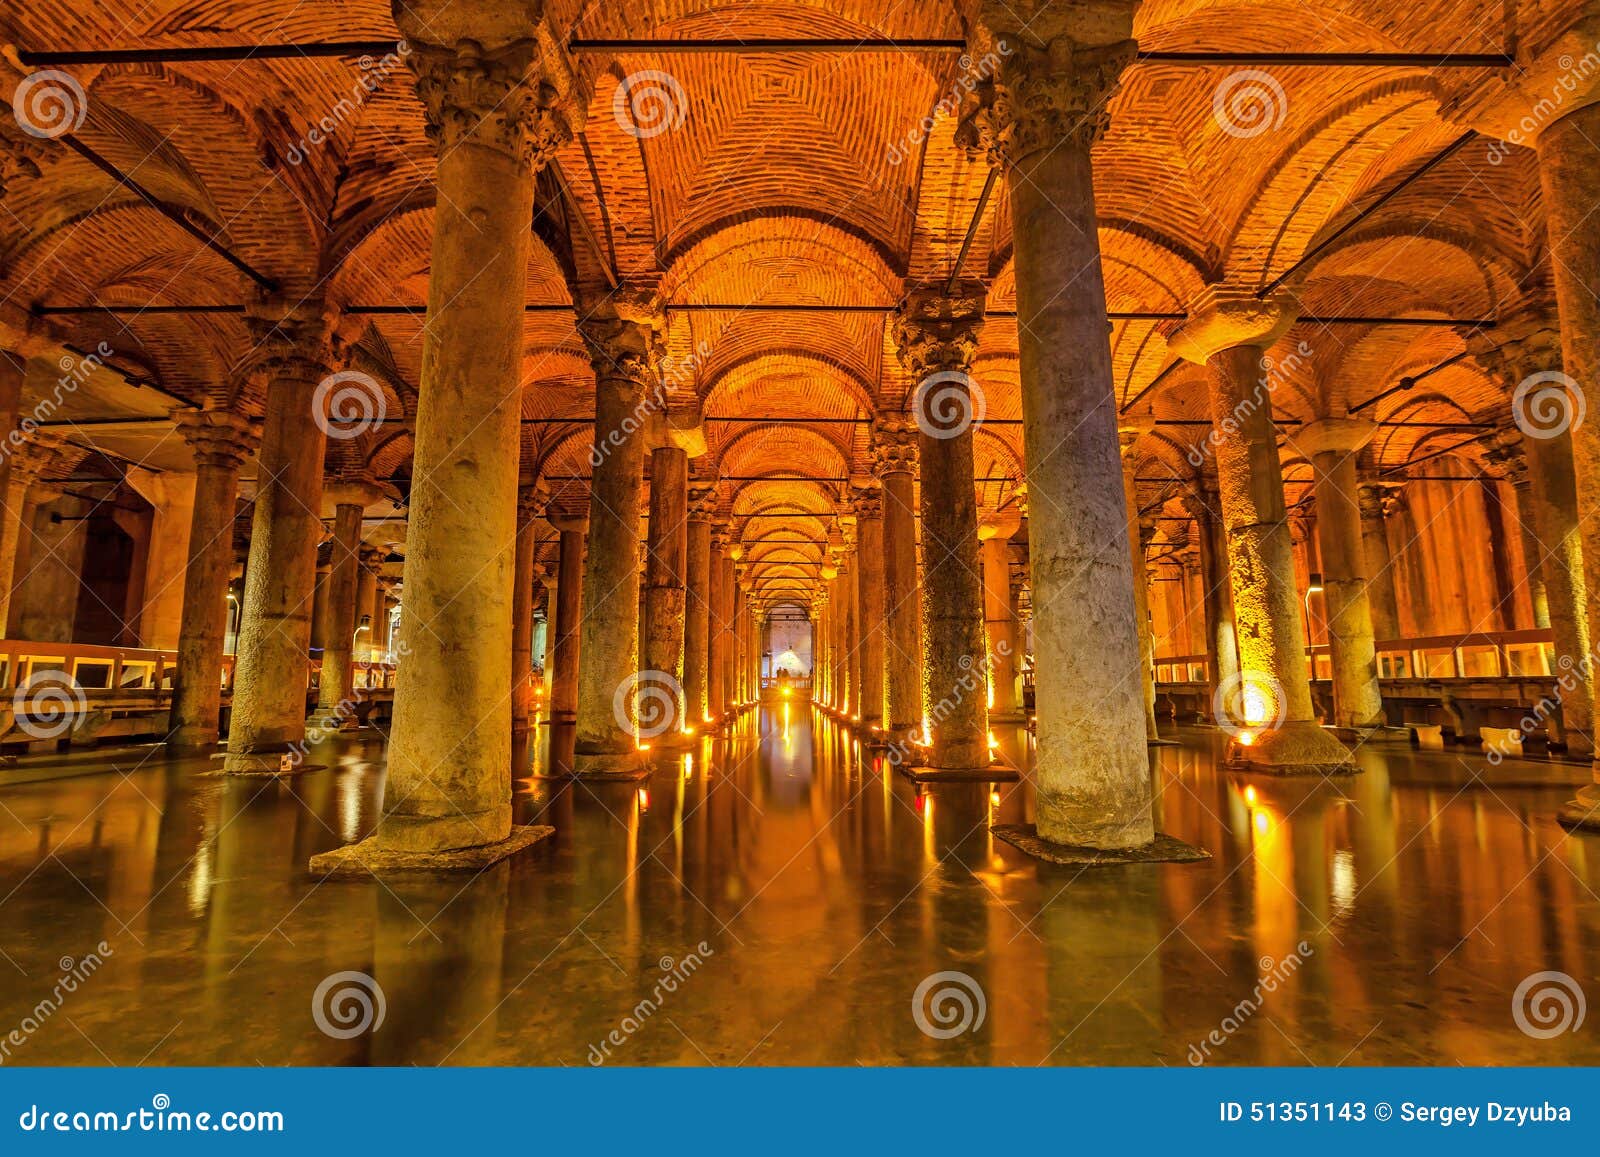 the basilica cistern, istanbul